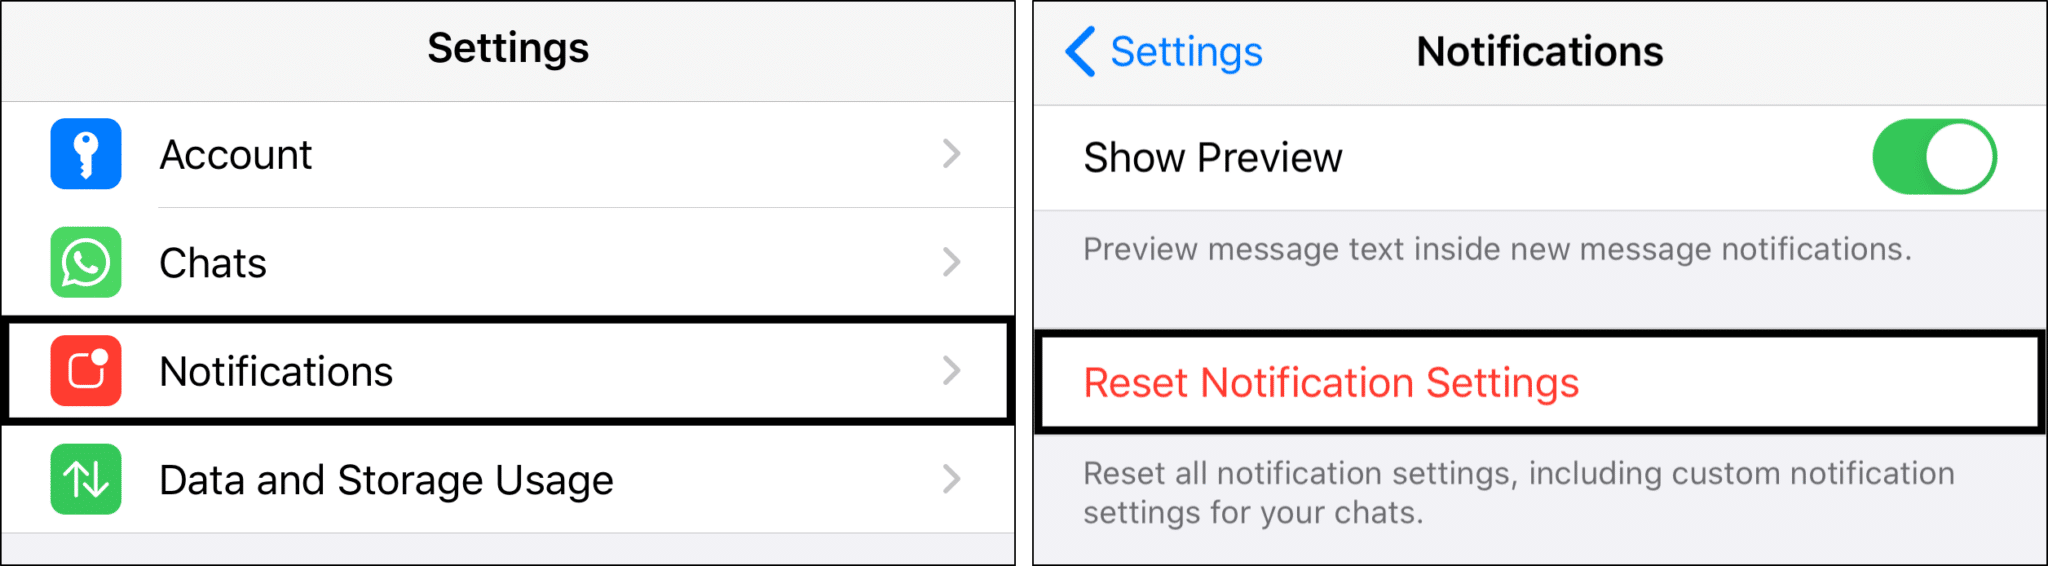 Reset whatsapp notification settings to fix whatsapp calls not ringing iPhone